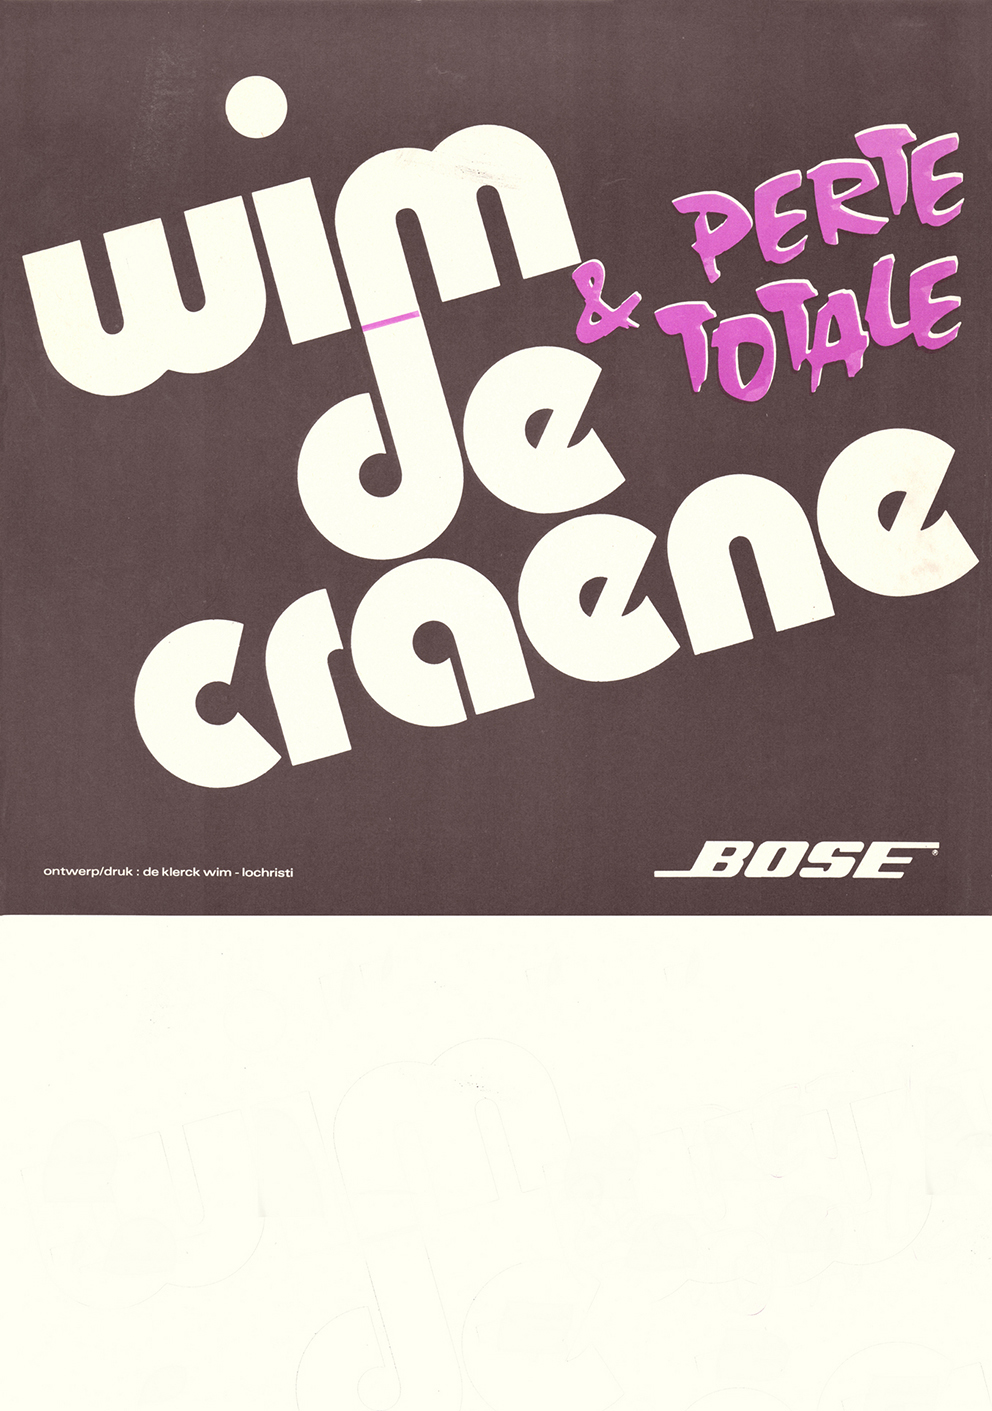 1981  Wim De Craene en  groep Perte Totale concertaffiche